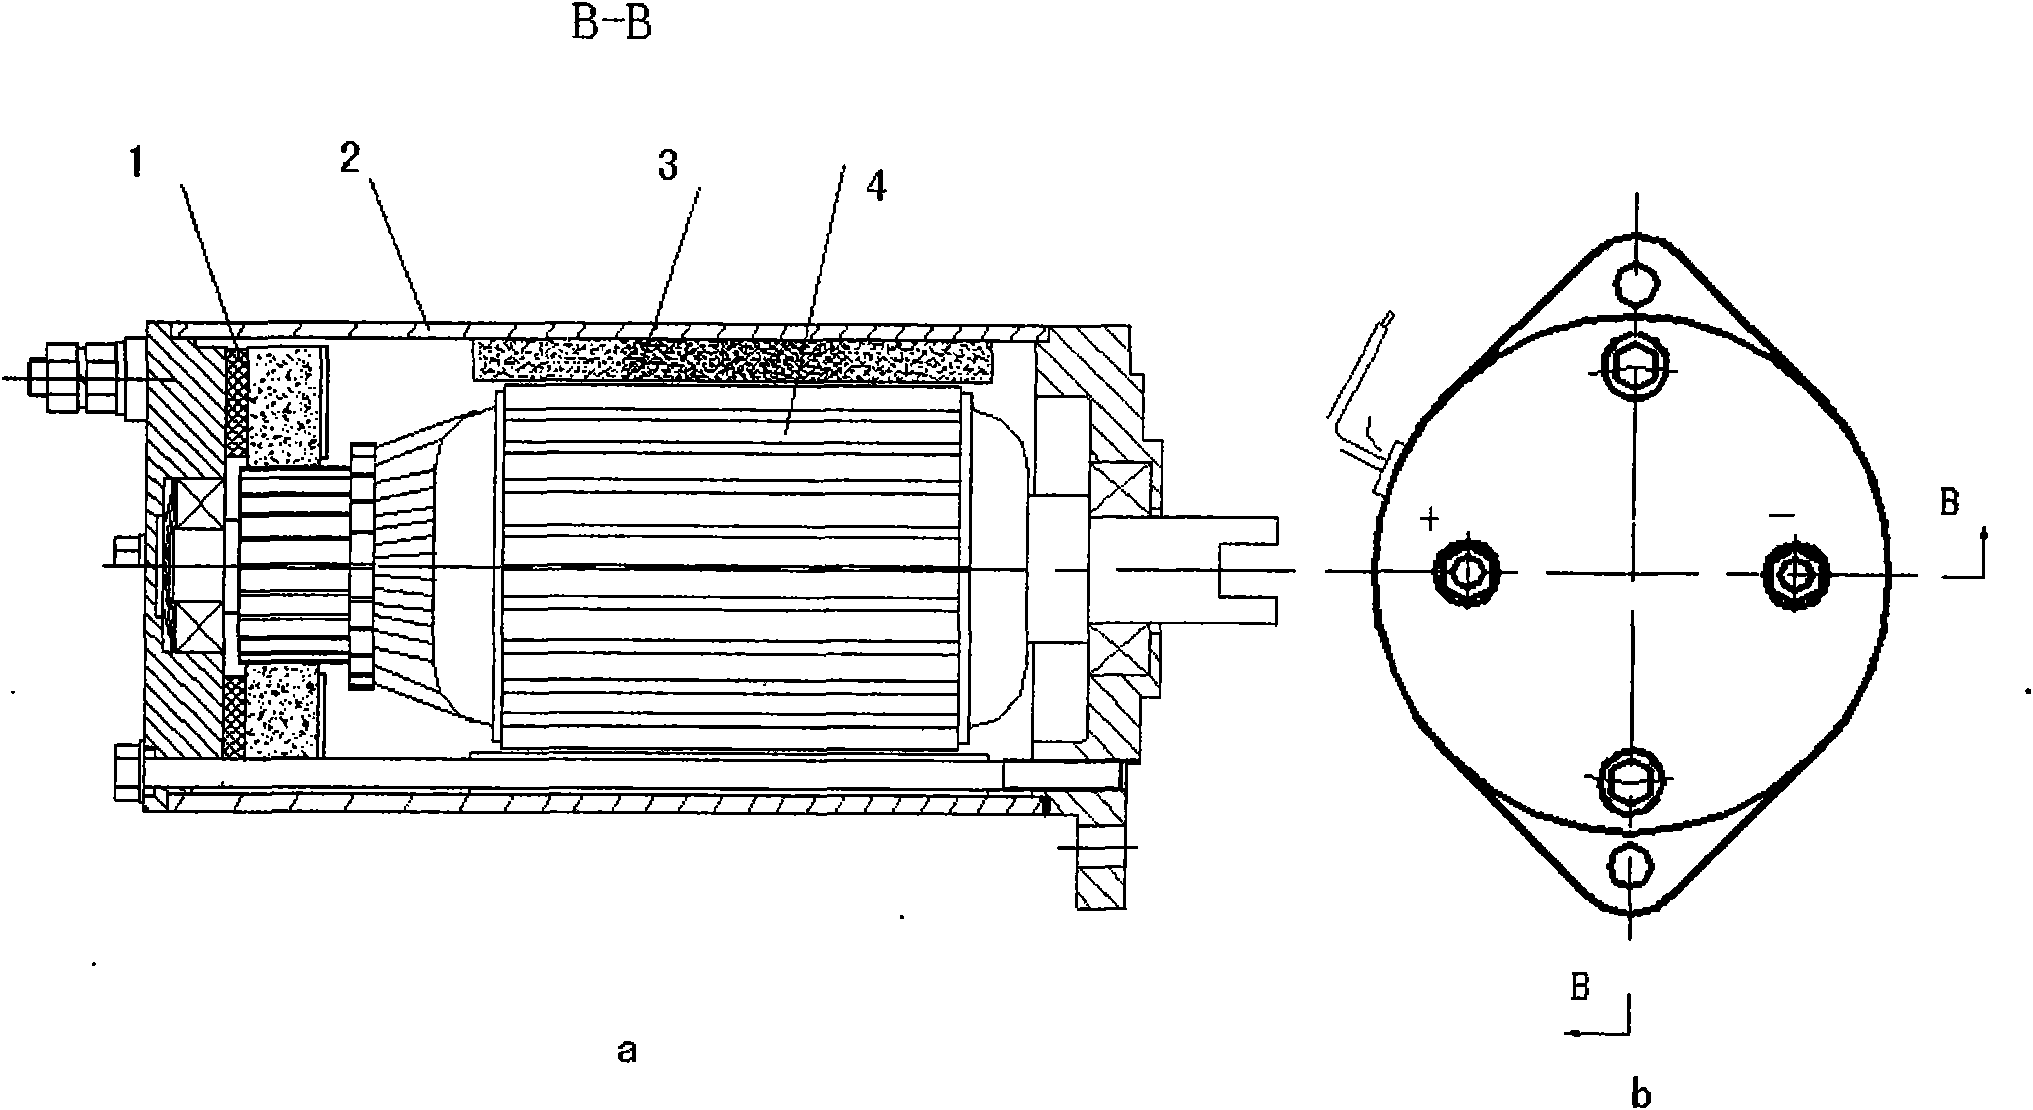 Permanent magnetic DC pump motor